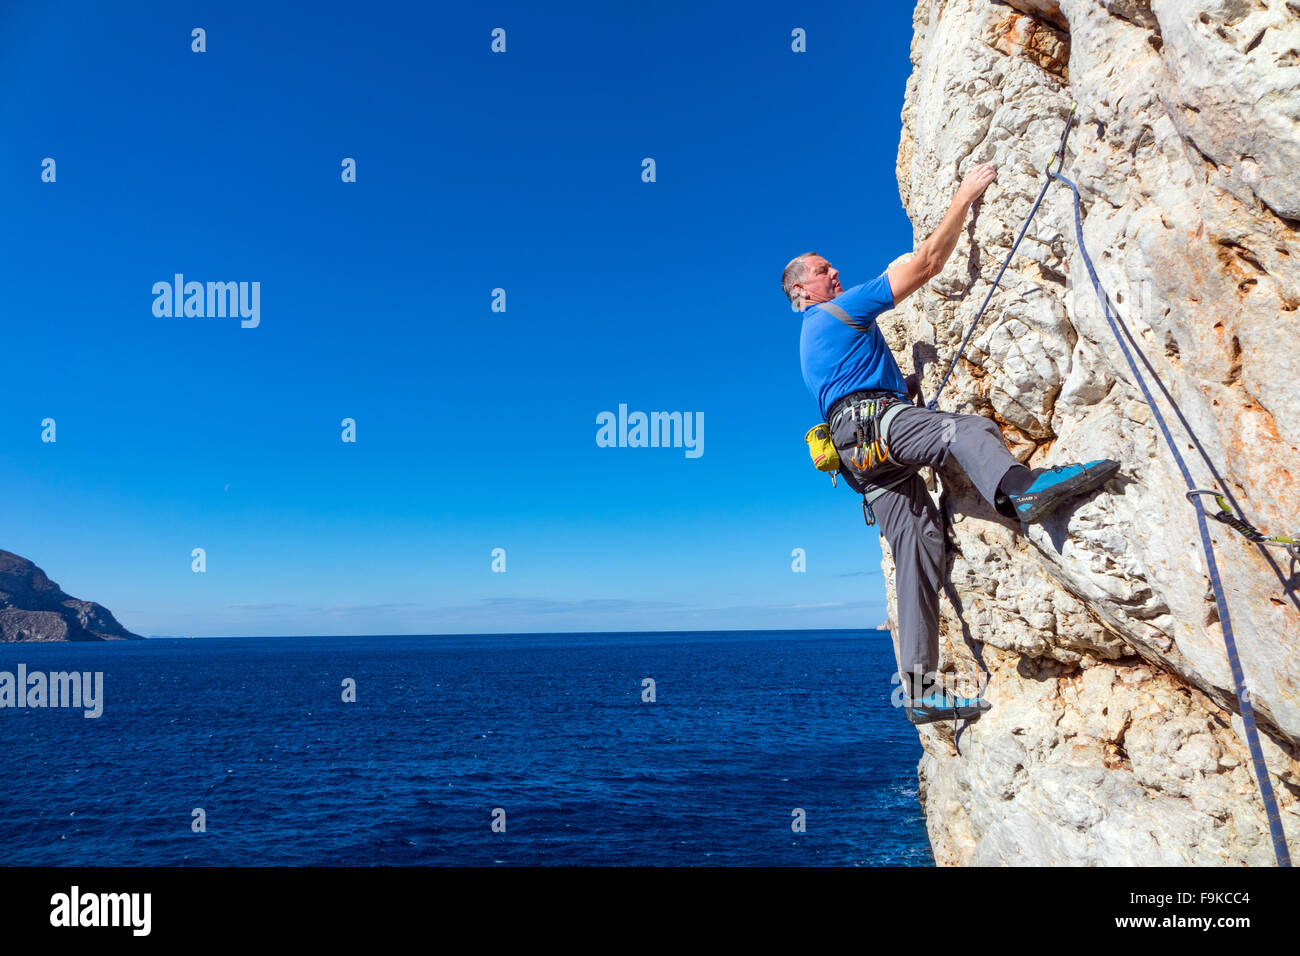 Rock climber rock climbing on steep cliff face Stock Photo